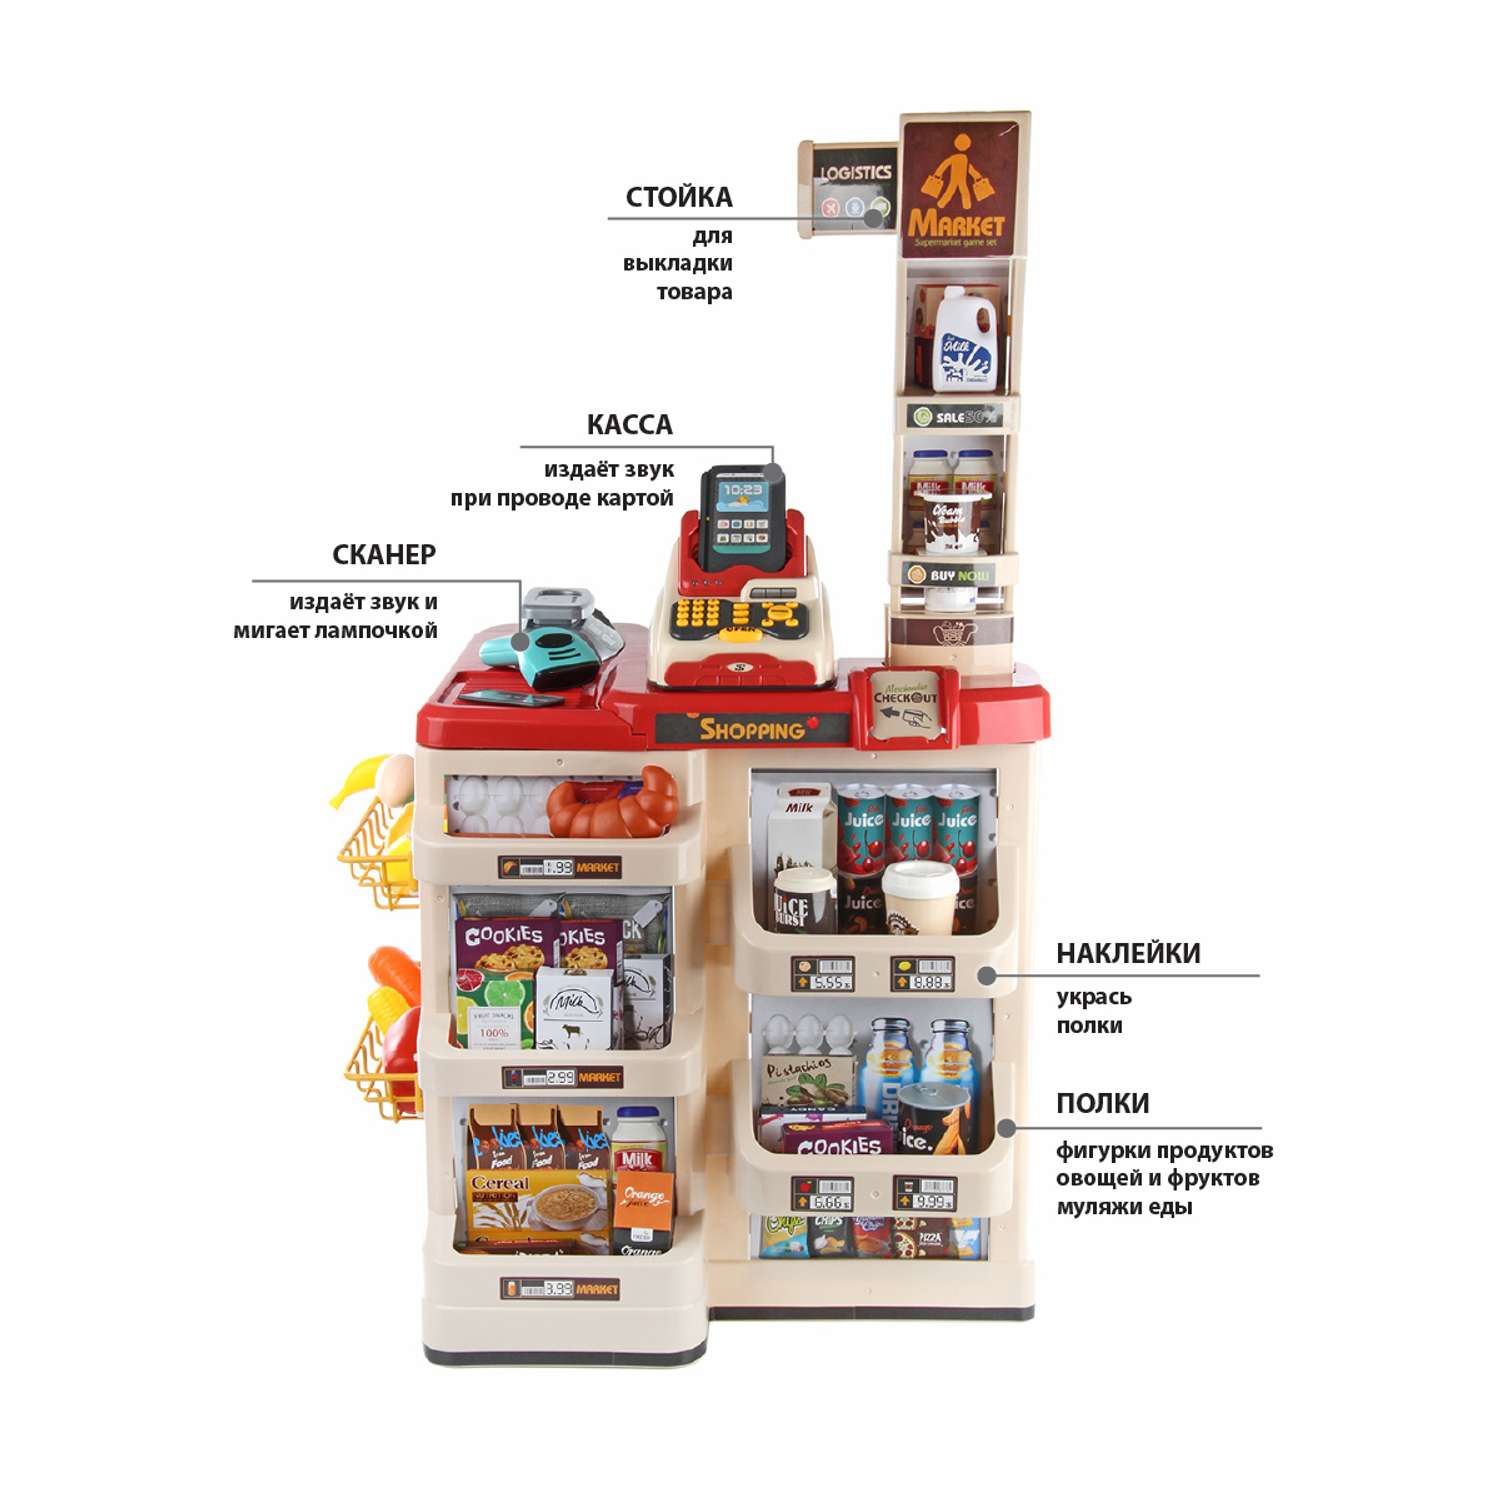 Игровой набор Veld Co Супермаркет касса и тележка с продуктами - фото 2